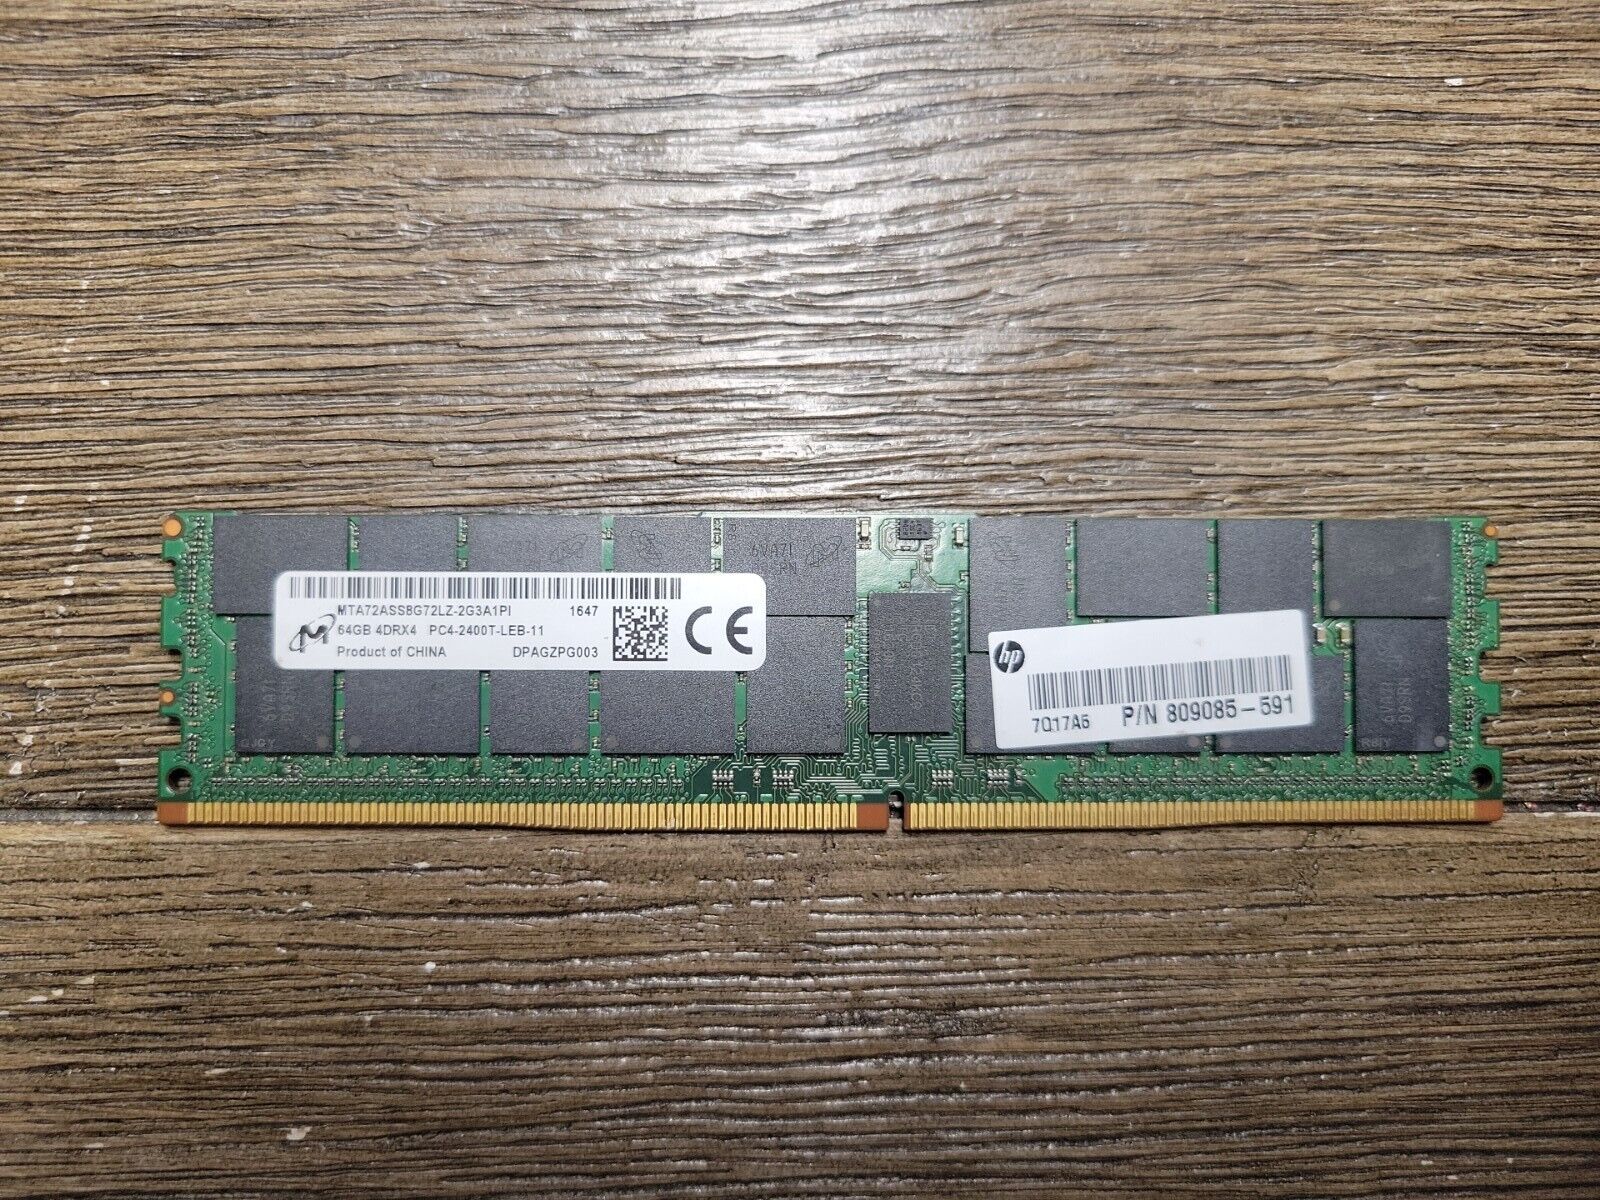 Micron 64GB DDR4 PC4-2400T Memory MTA72ASS8G72LZ-2G3A1PI 